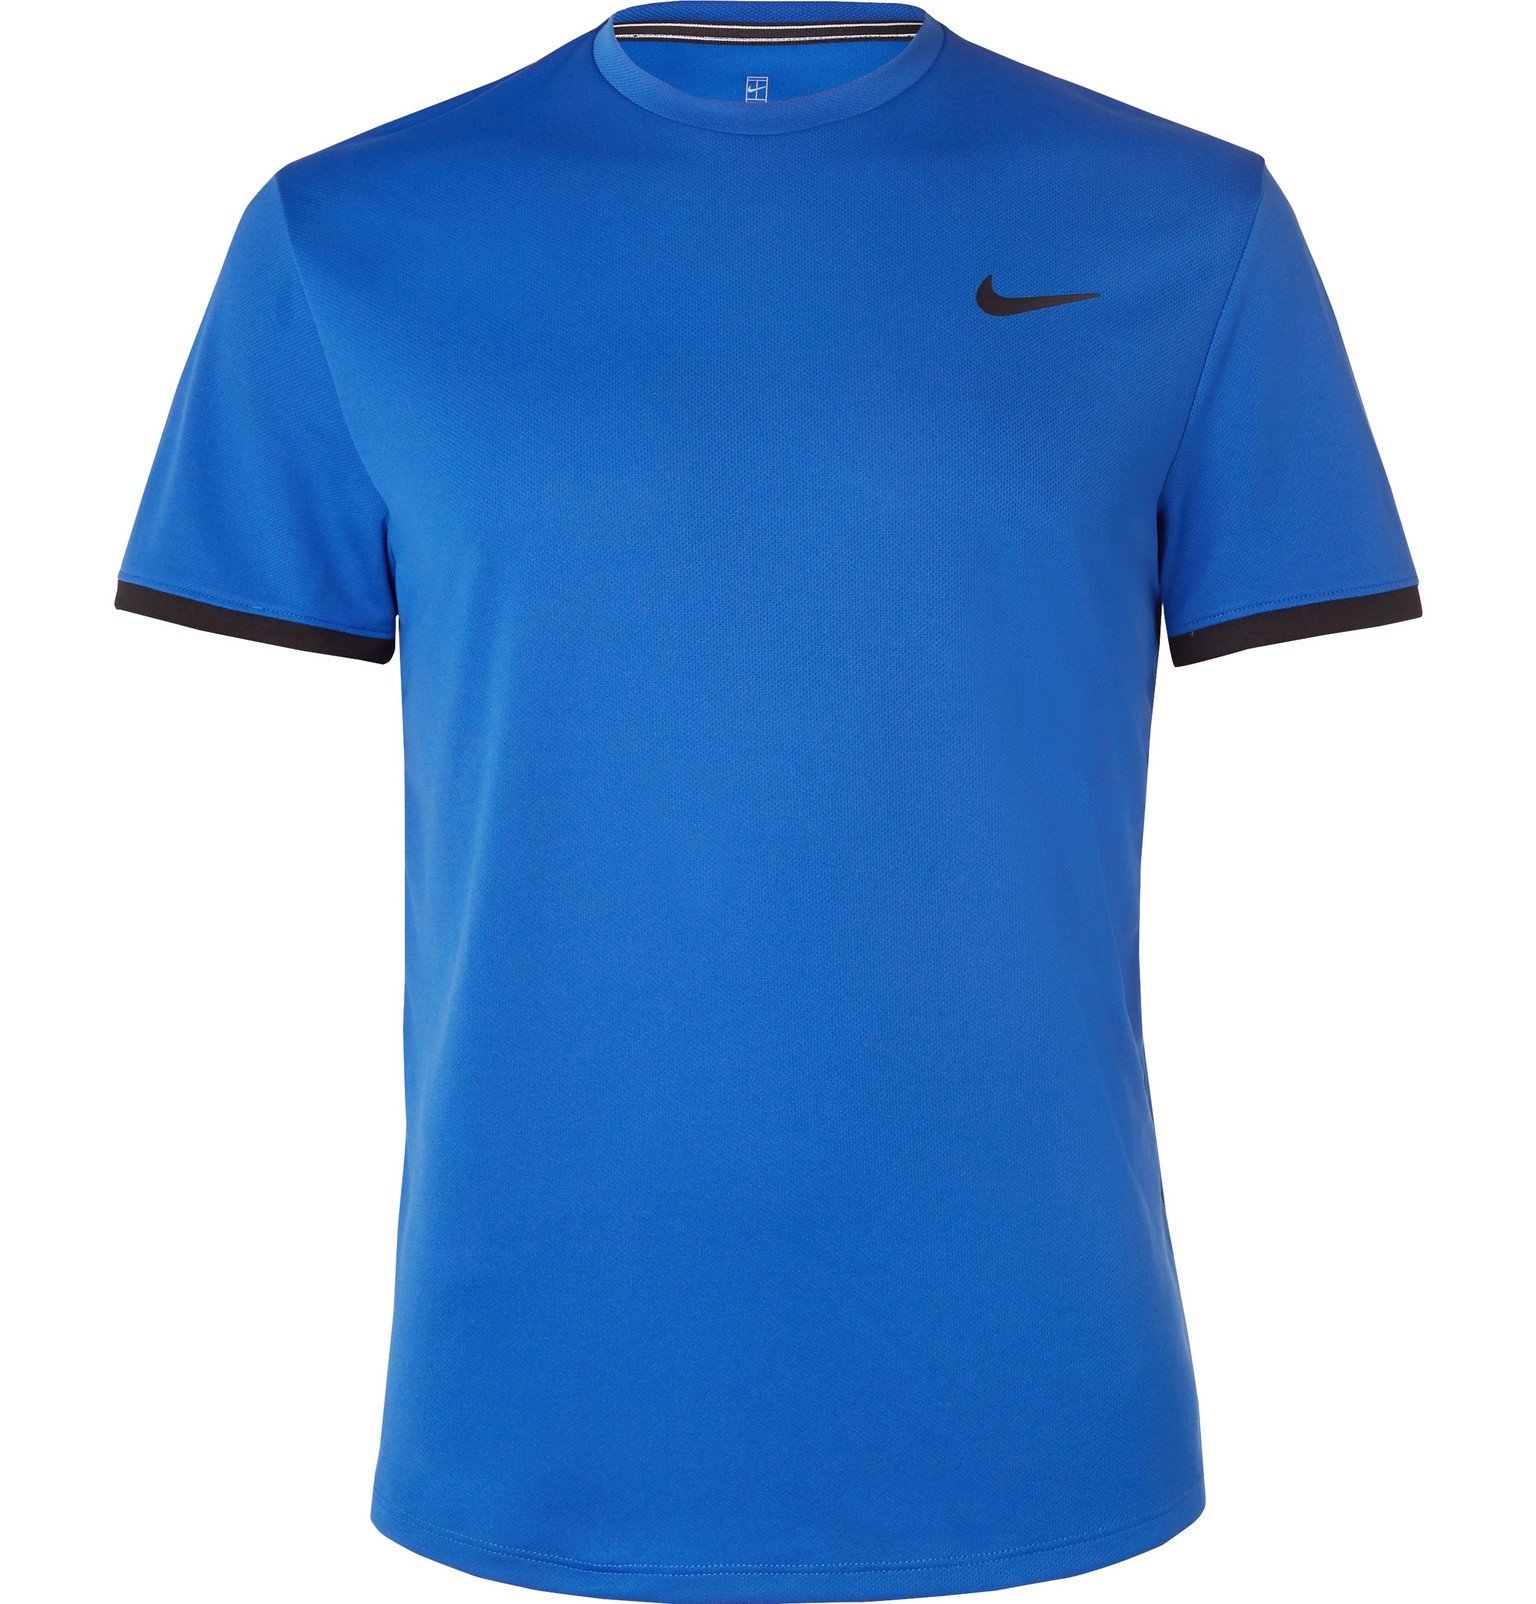 Kaal Bloody Italiaans Nike Tennis - NikeCourt Dri-FIT Tennis T-Shirt - Blue Nike Tennis